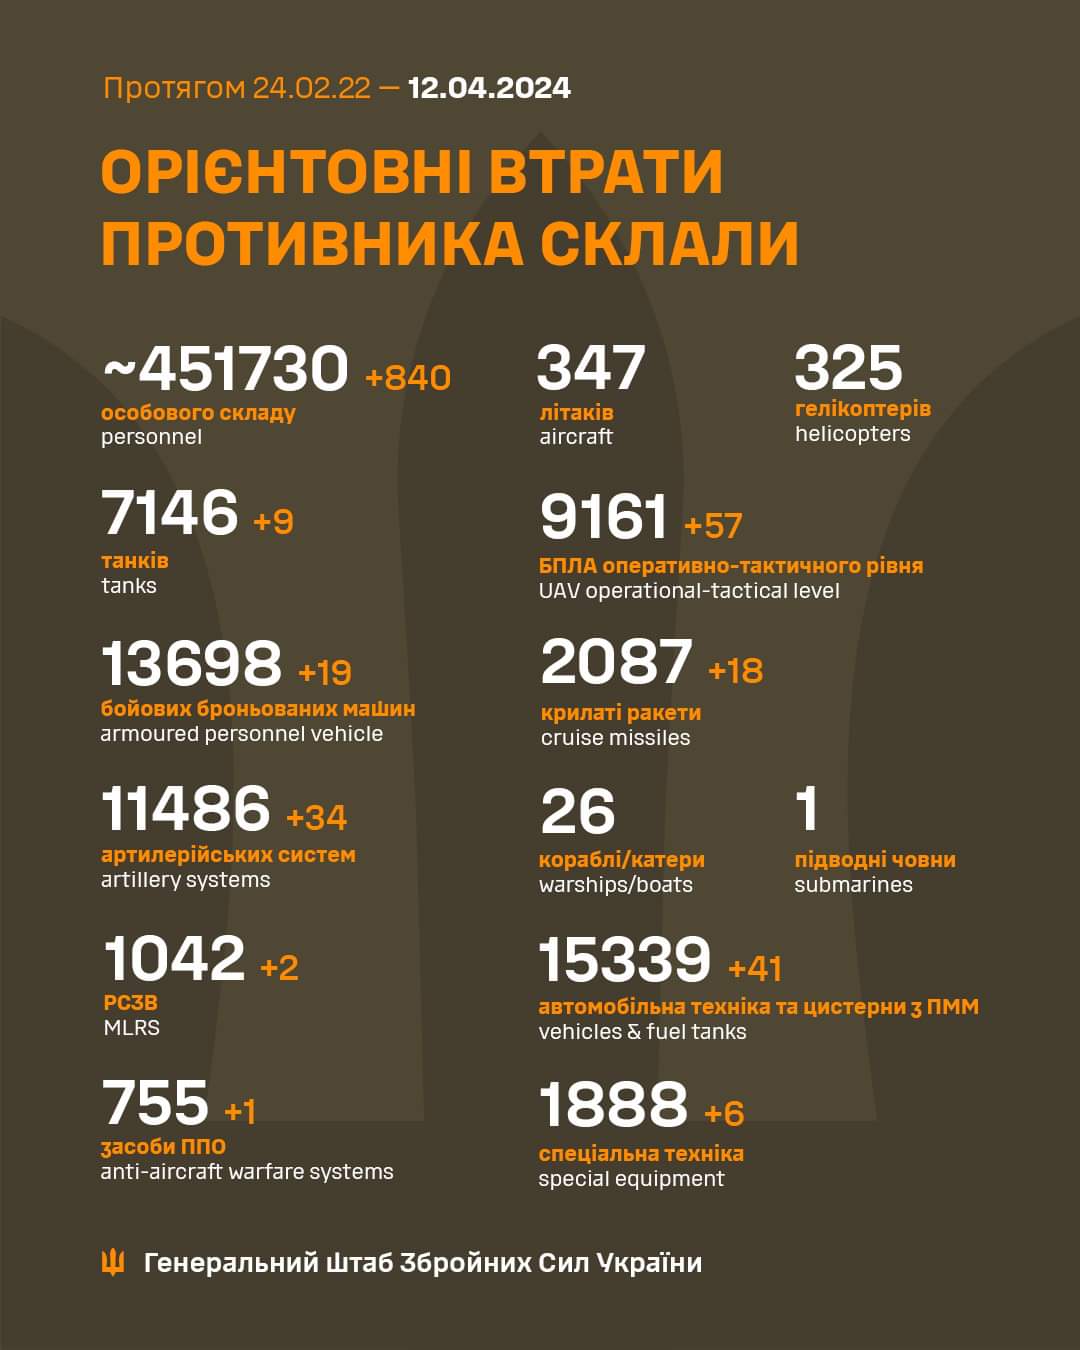 Потери армии РФ на 12 апреля 2024 года